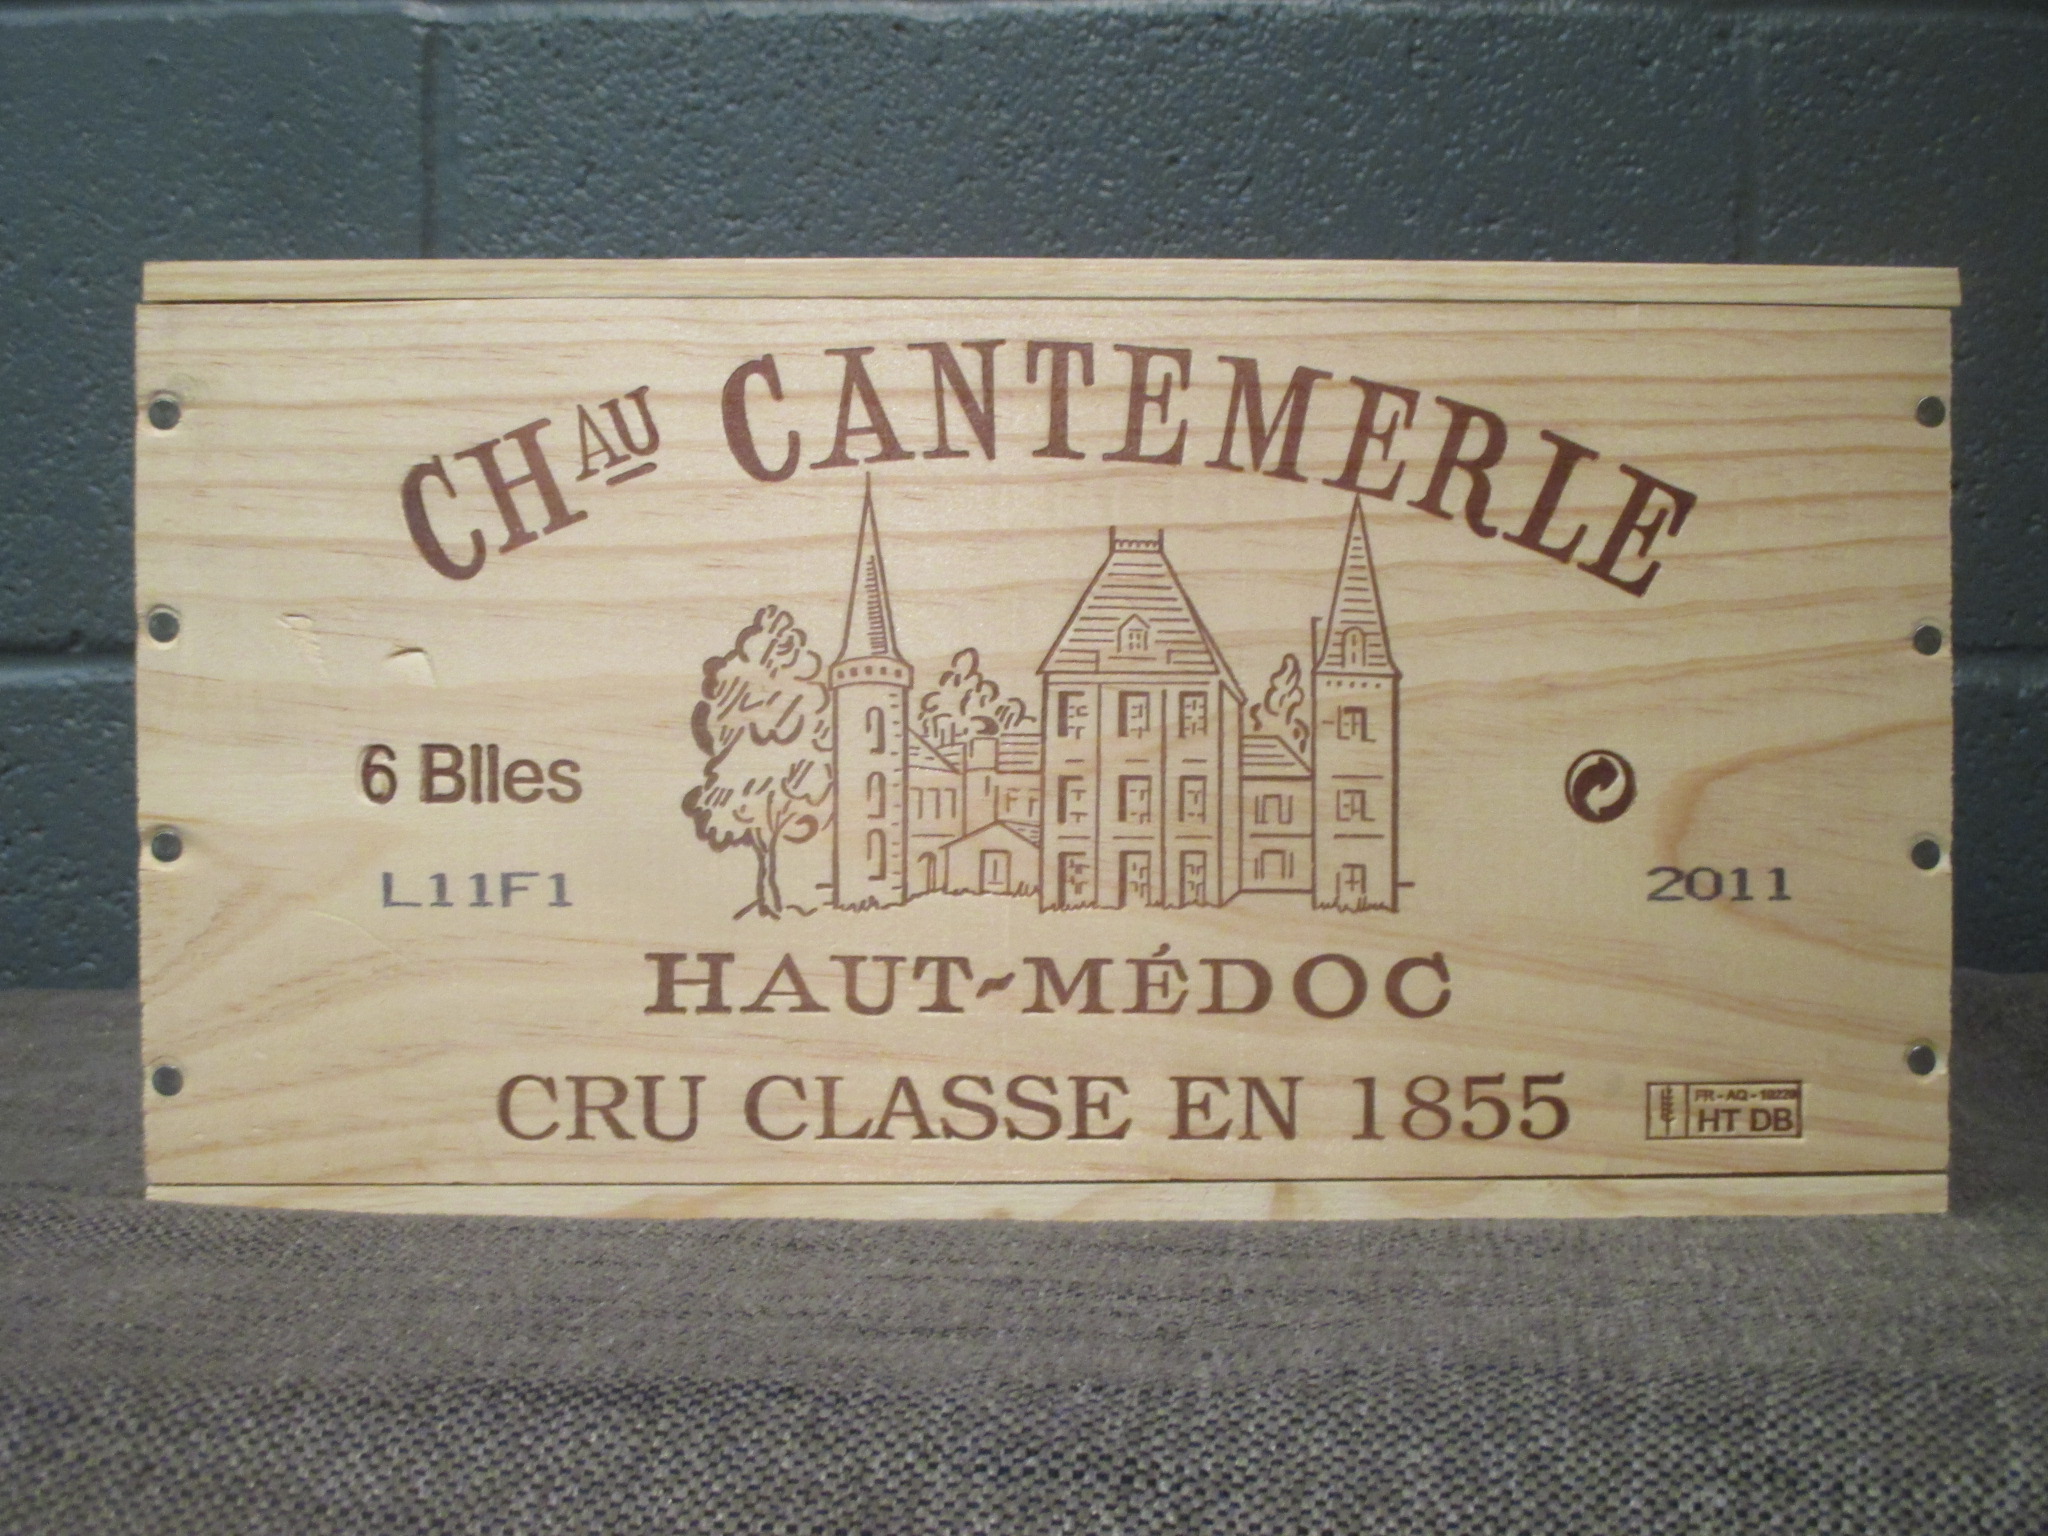 Chateau Cantemerle, Haut-Medoc 2011, 6 bottles